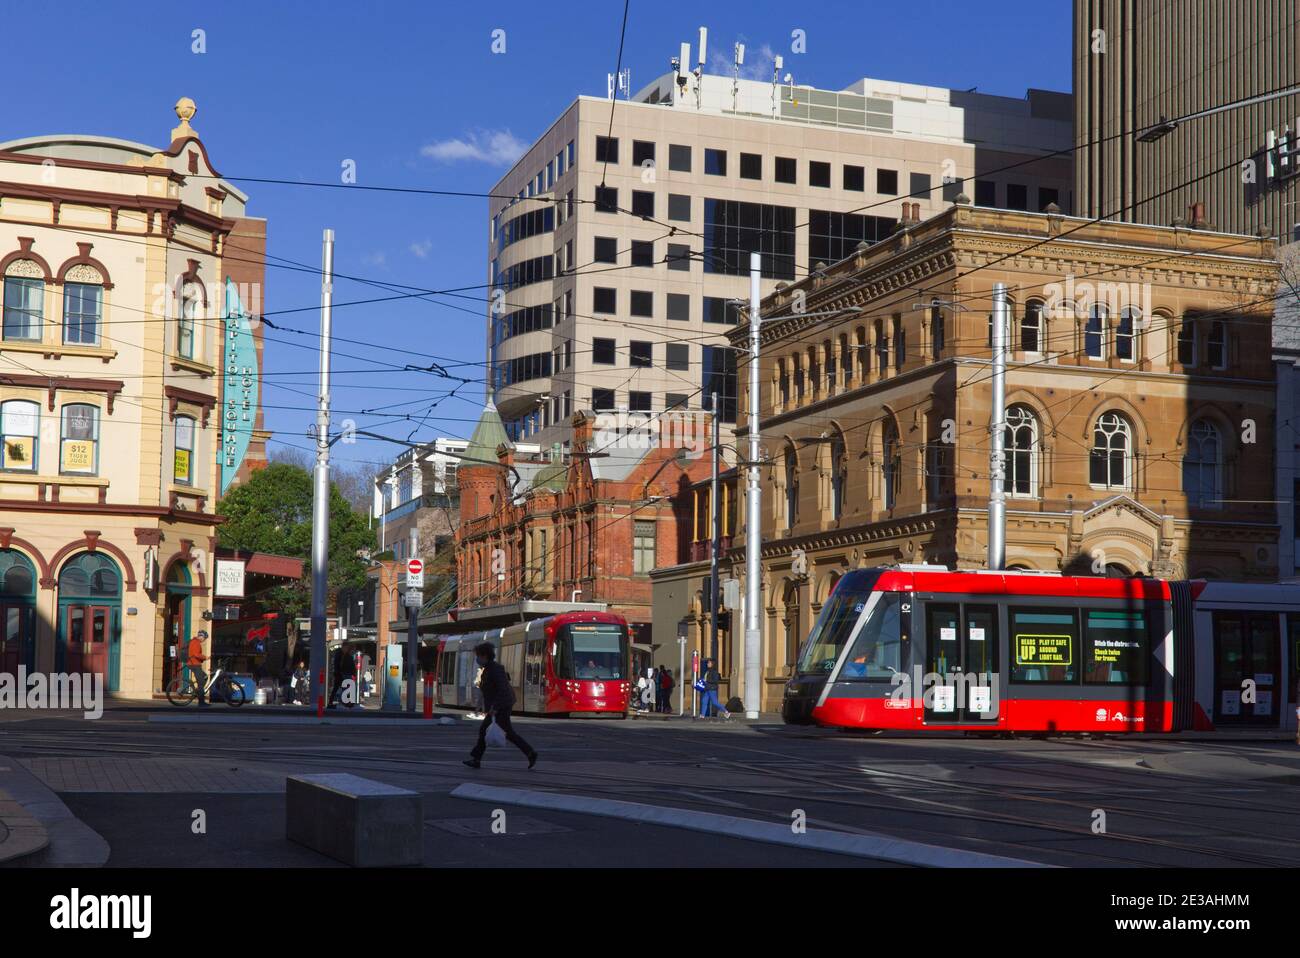 The Sydney Light Rail public transport system operating in the CBD of Sydney Australia Stock Photo